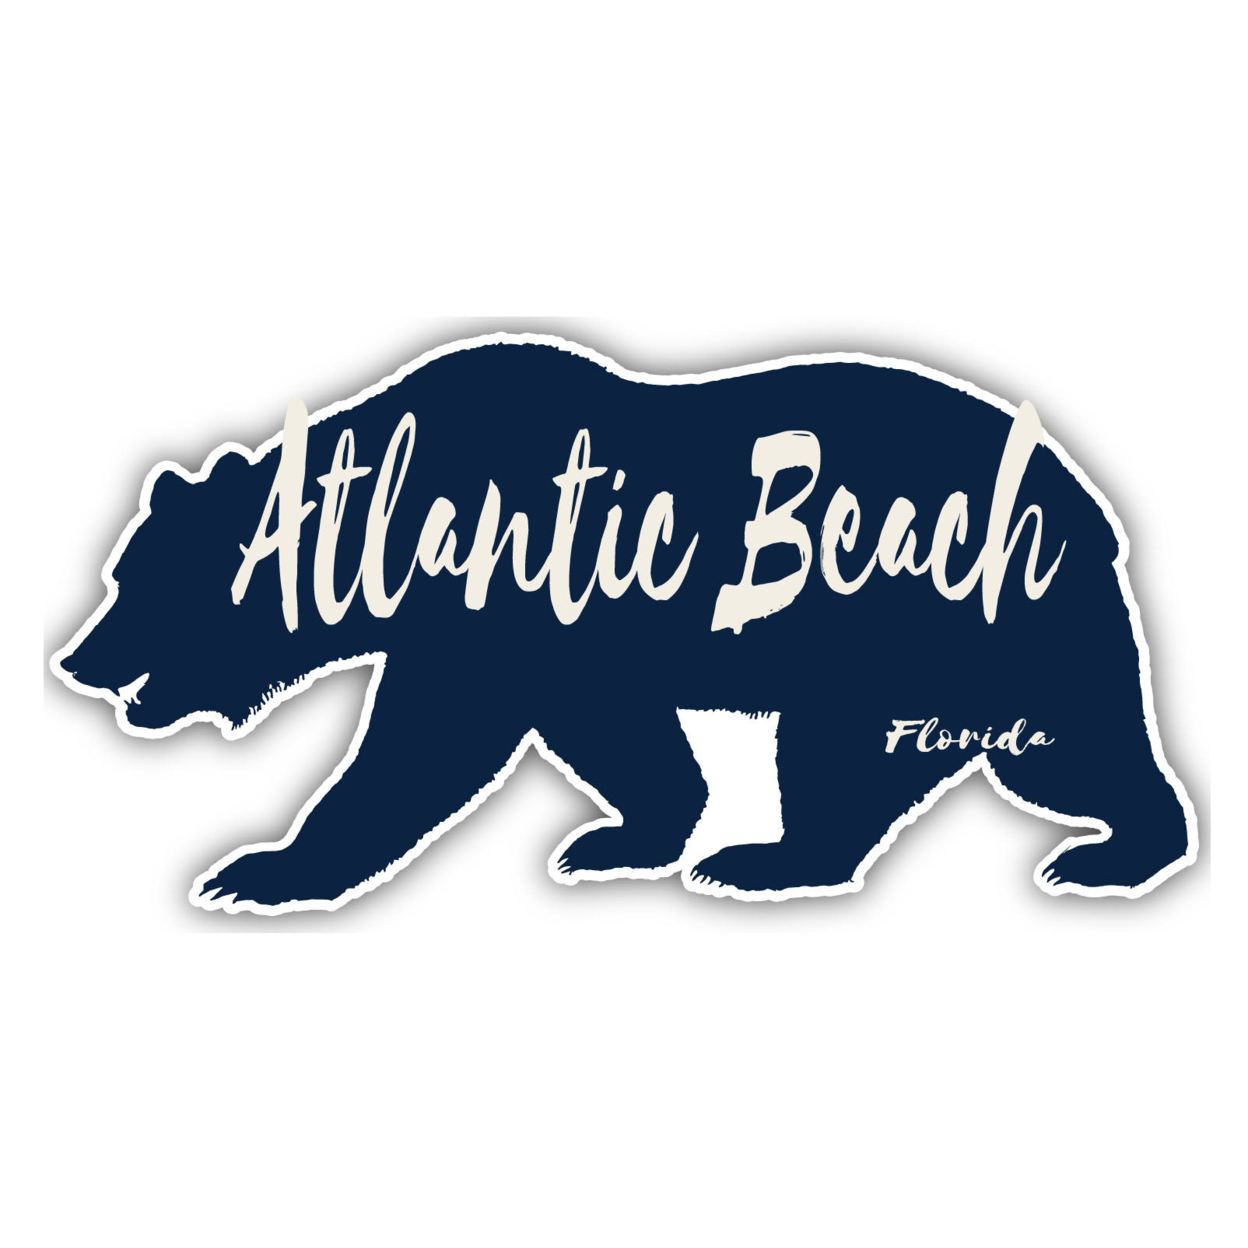 Atlantic Beach Florida Souvenir Decorative Stickers (Choose Theme And Size) - 4-Pack, 2-Inch, Bear